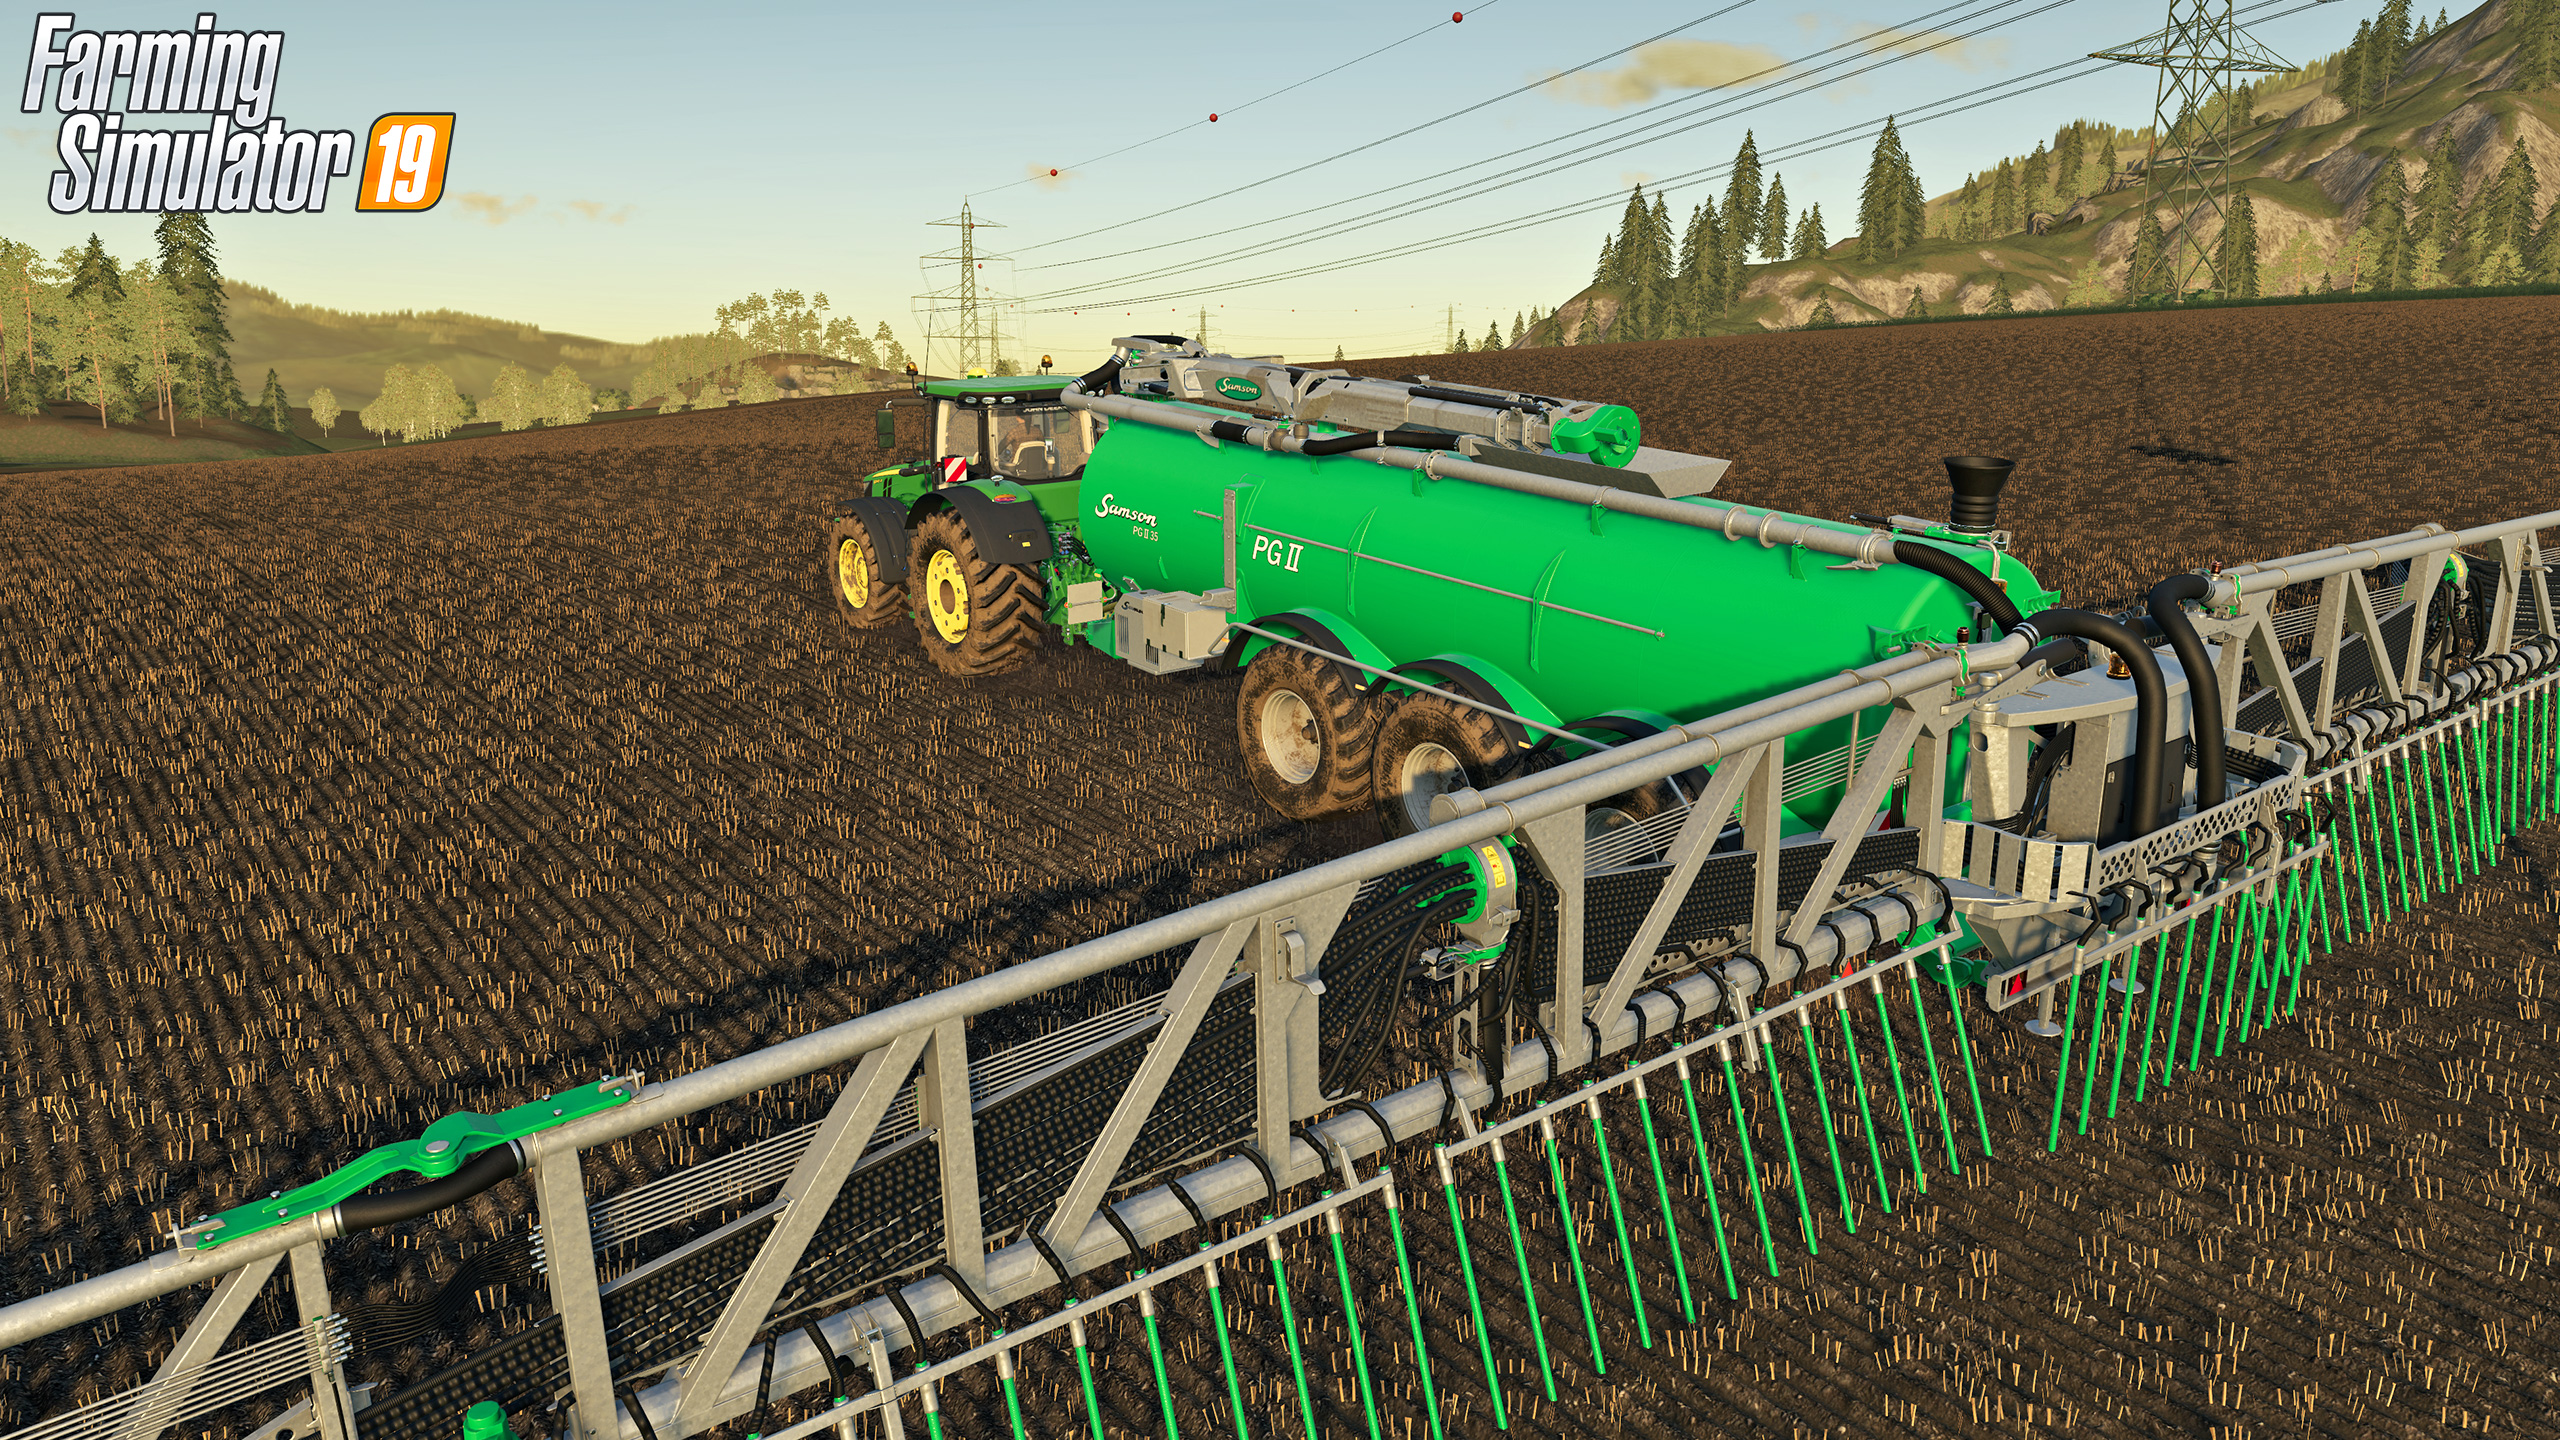 farming simulator 19 for pc